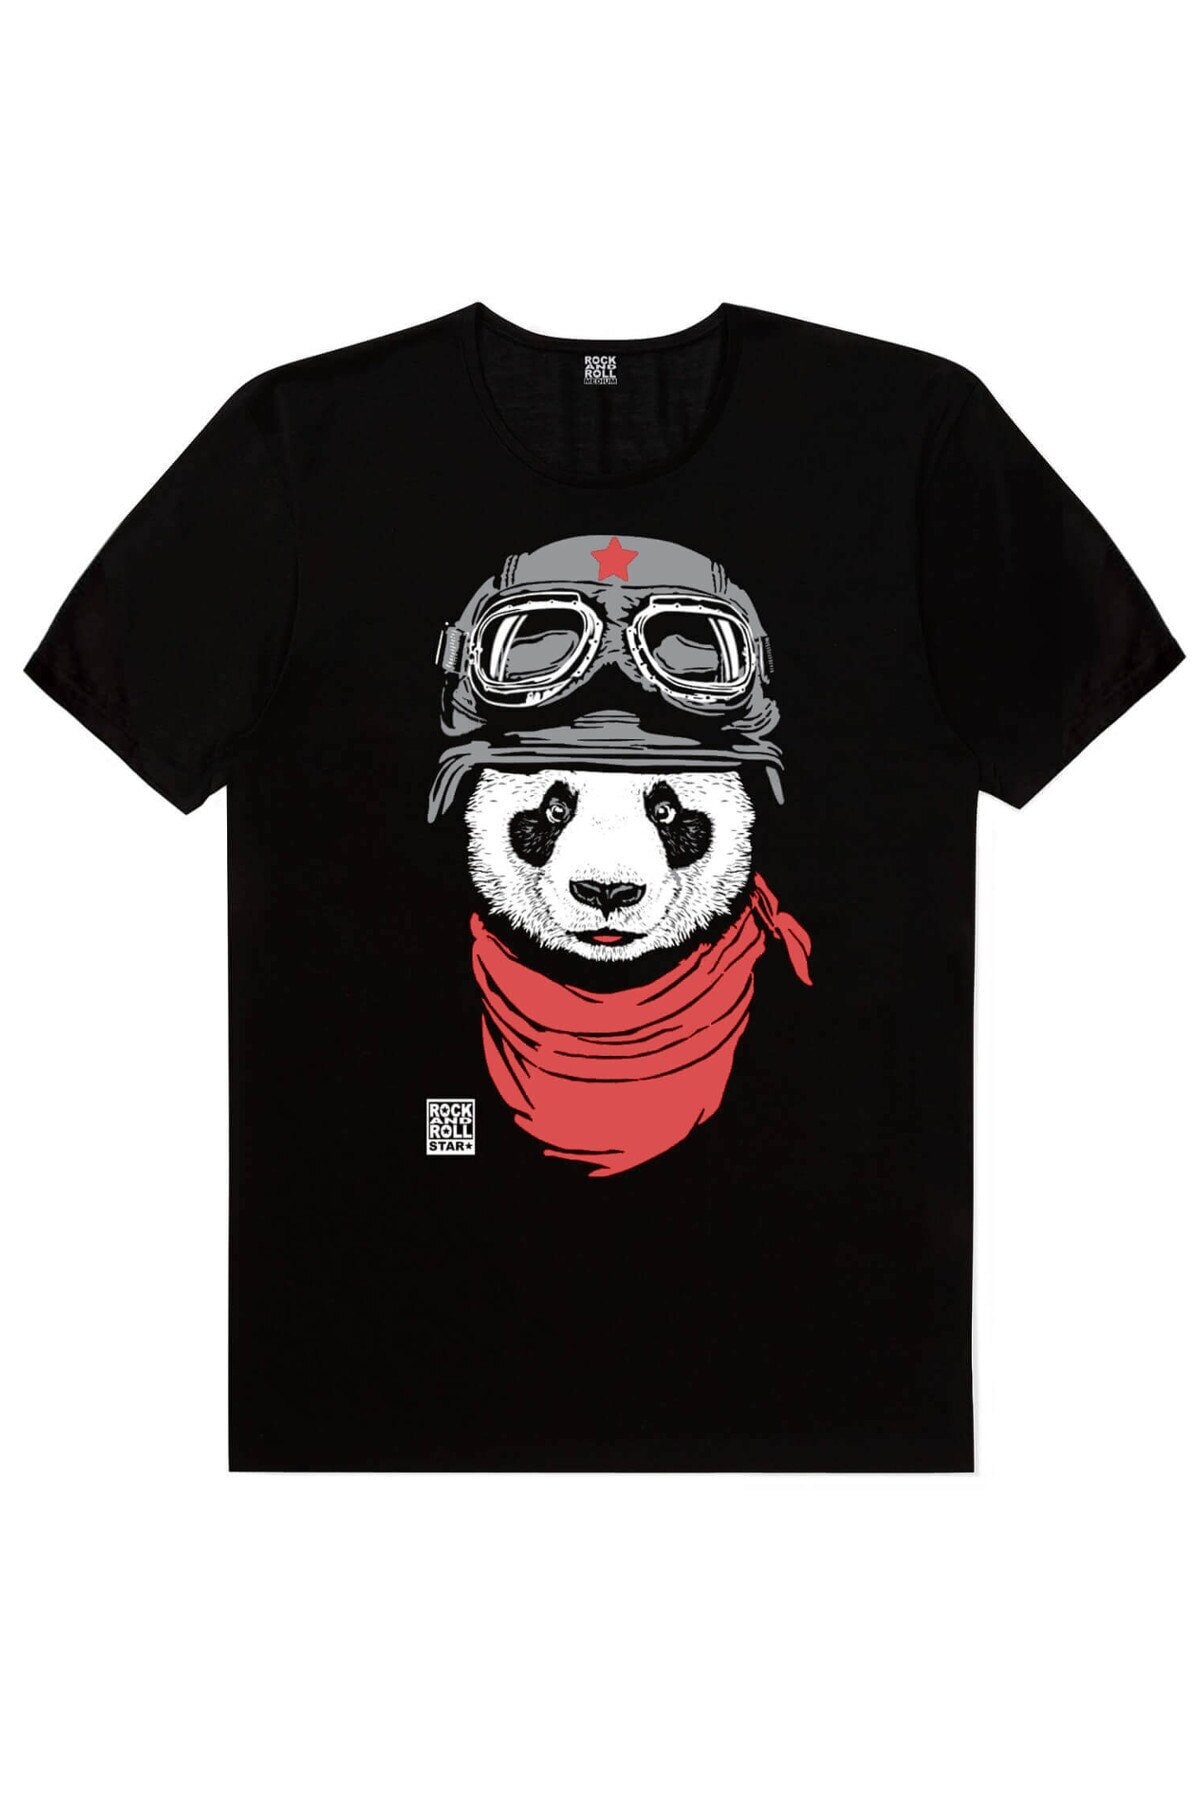 Bandanalı Panda, Satürnde Panda Erkek 2'li Eko Paket T-shirt